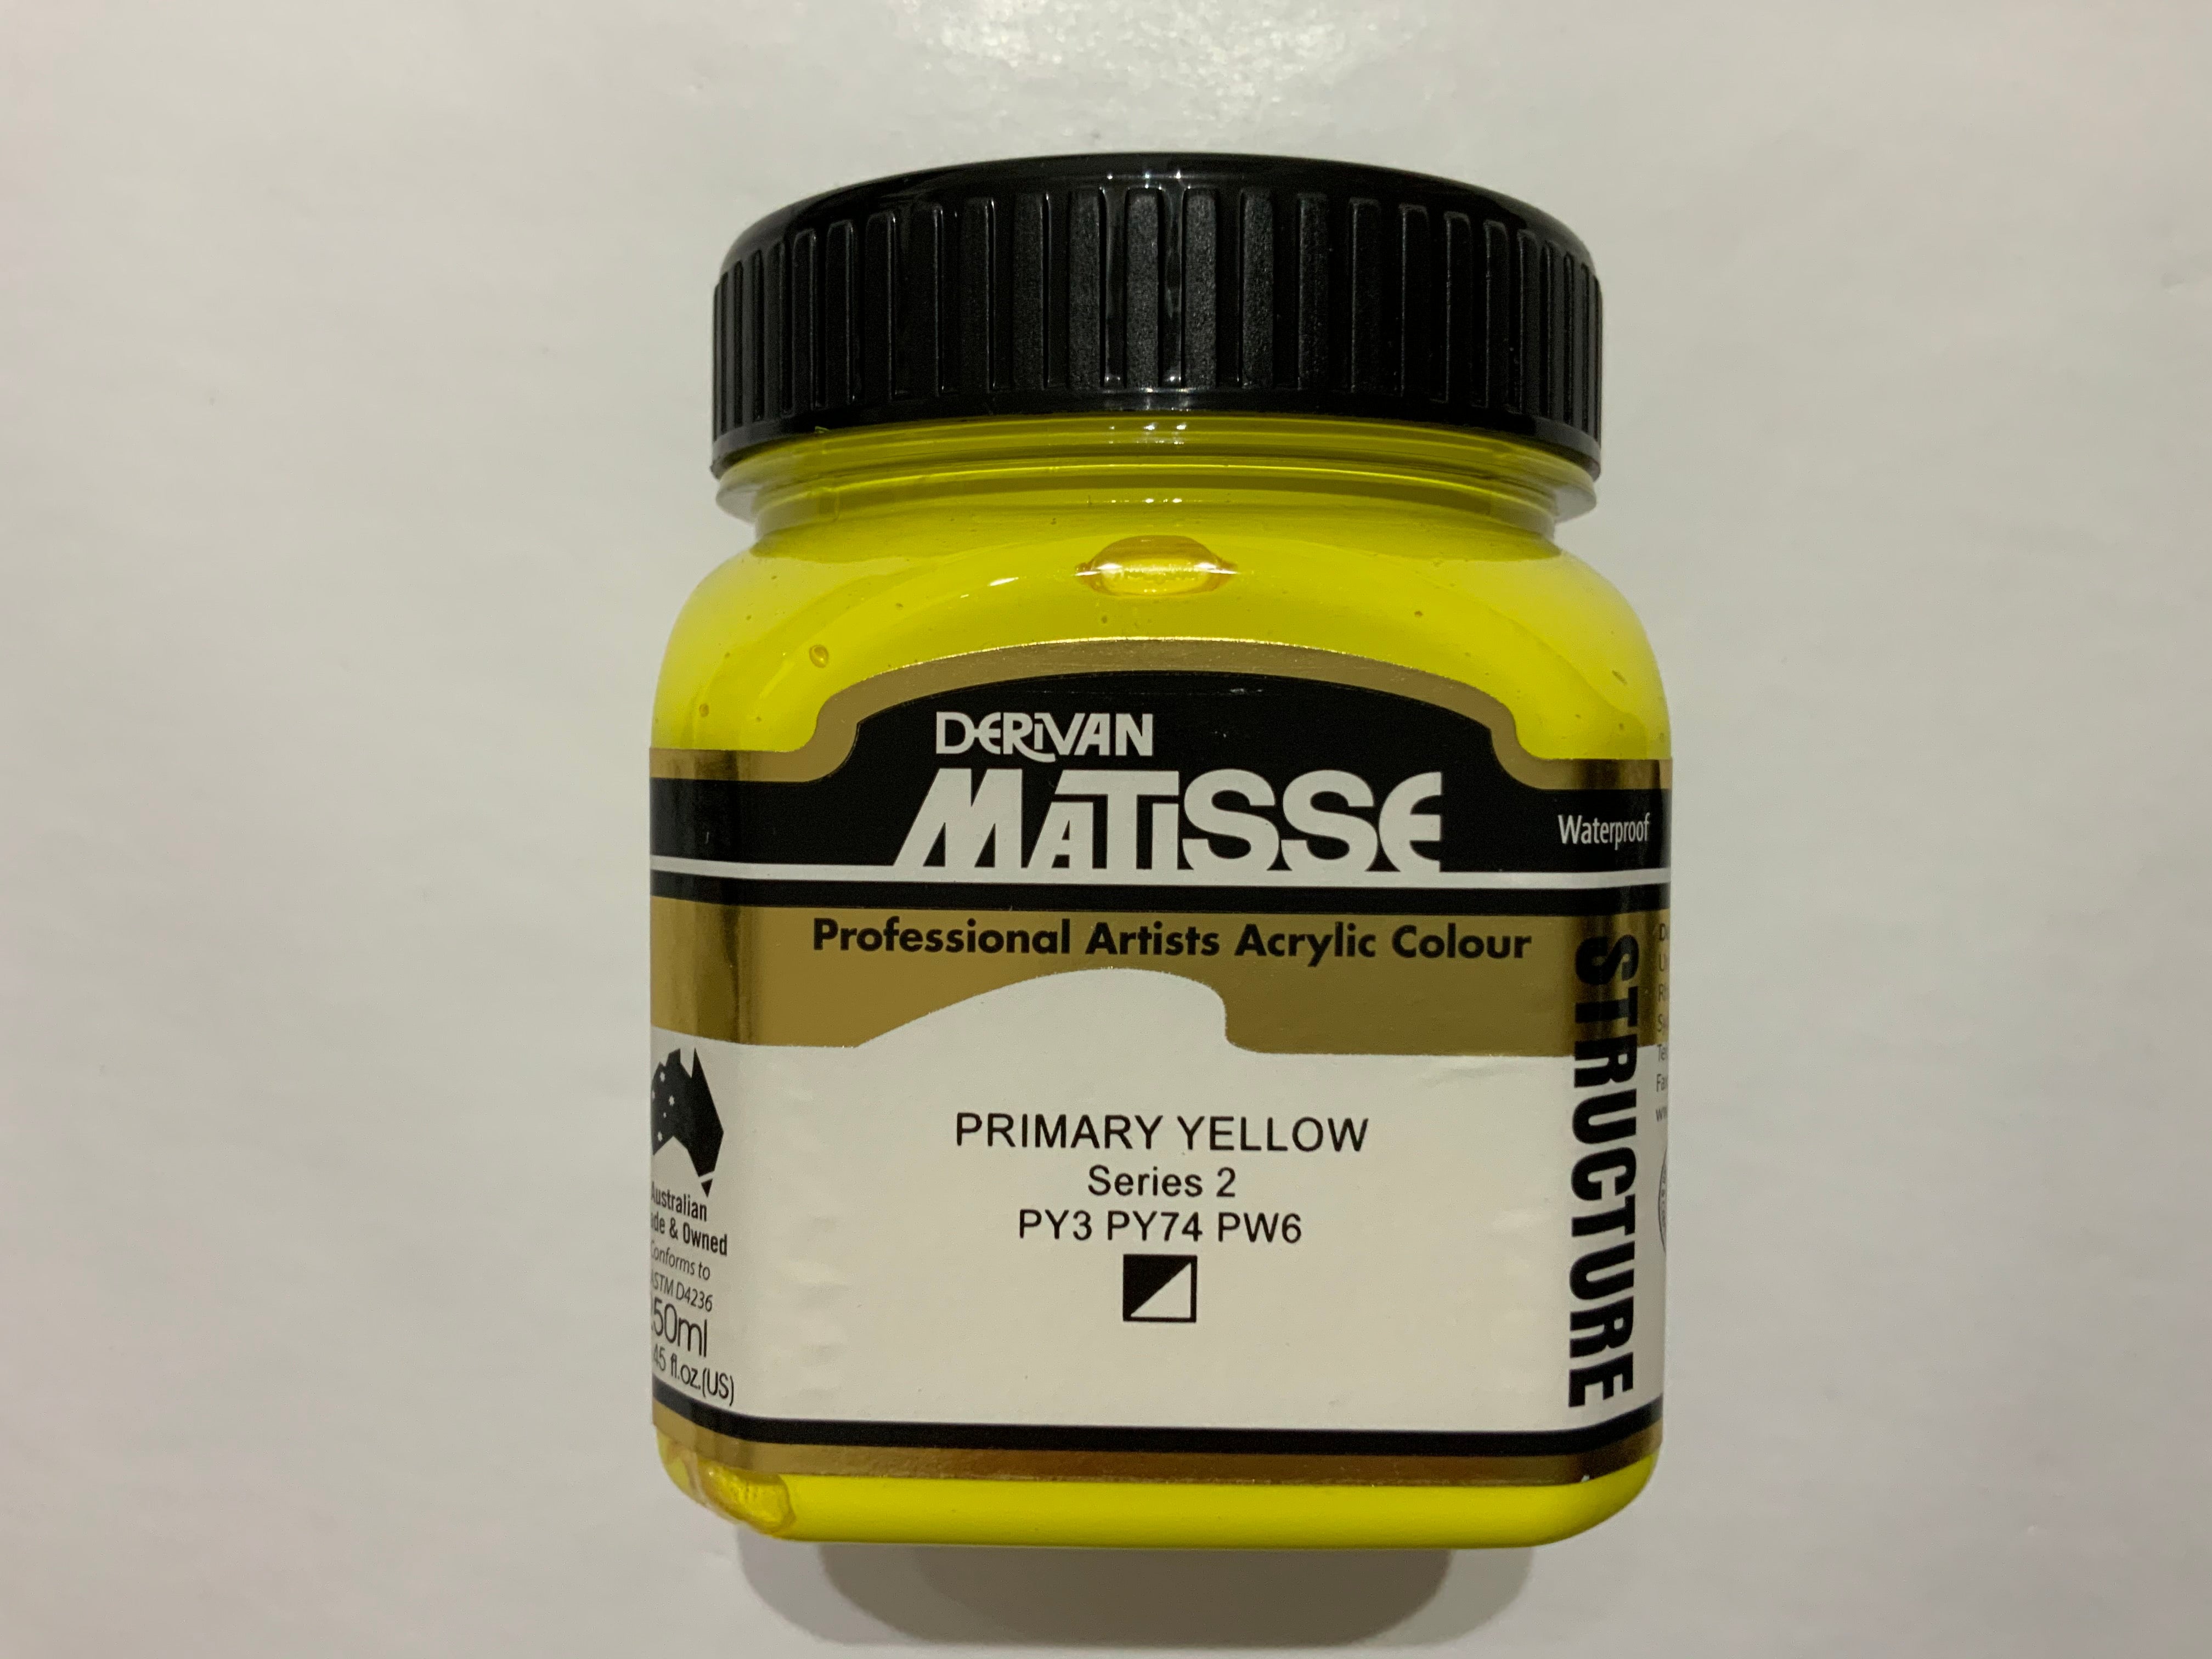 Matisse Acrylic Paint - Primary Yellow